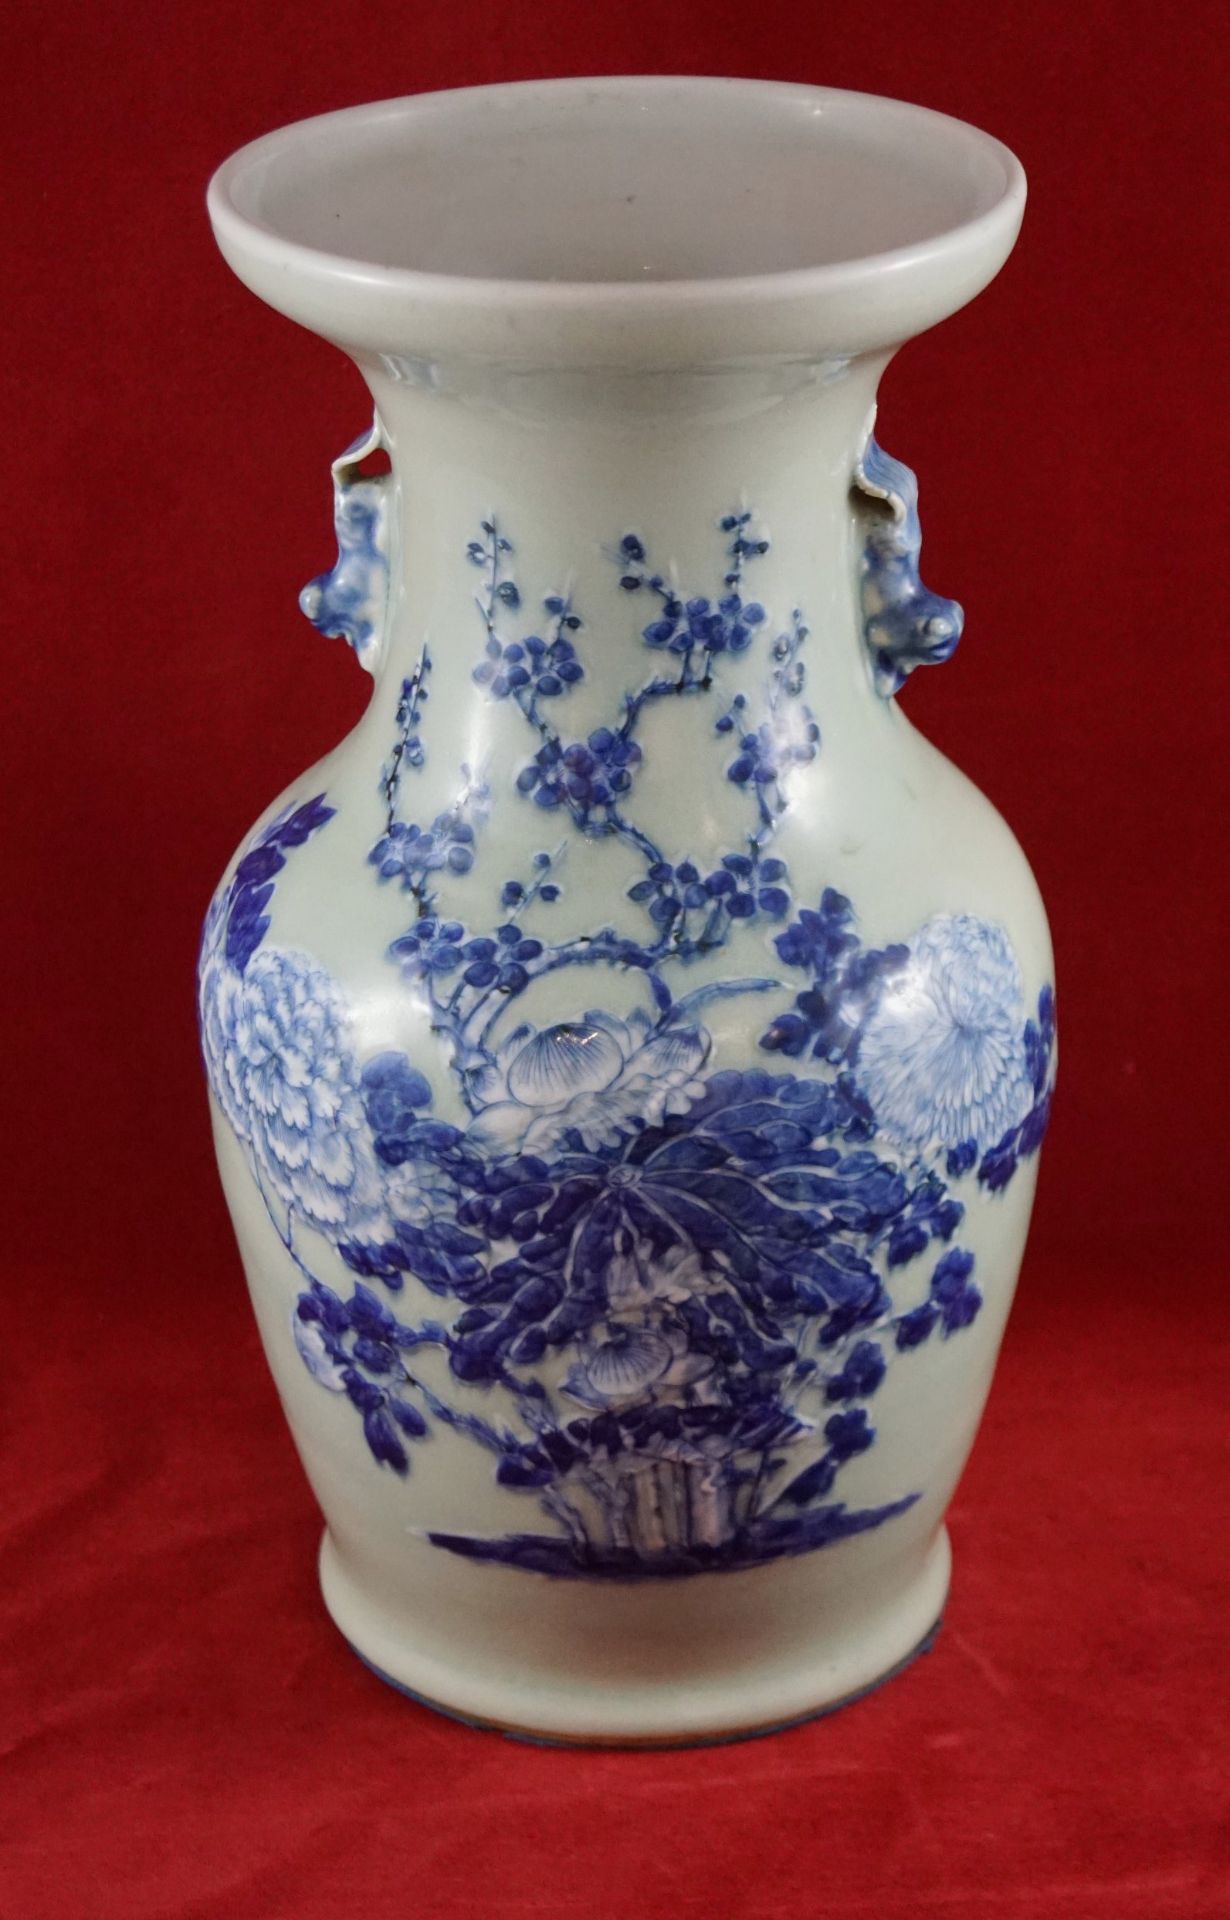 Rouleau Vase, China Porzellan, seladonfarben mit blauen erhabenen Blumenmotiven, 19. Jhrd, Höhe 33,5